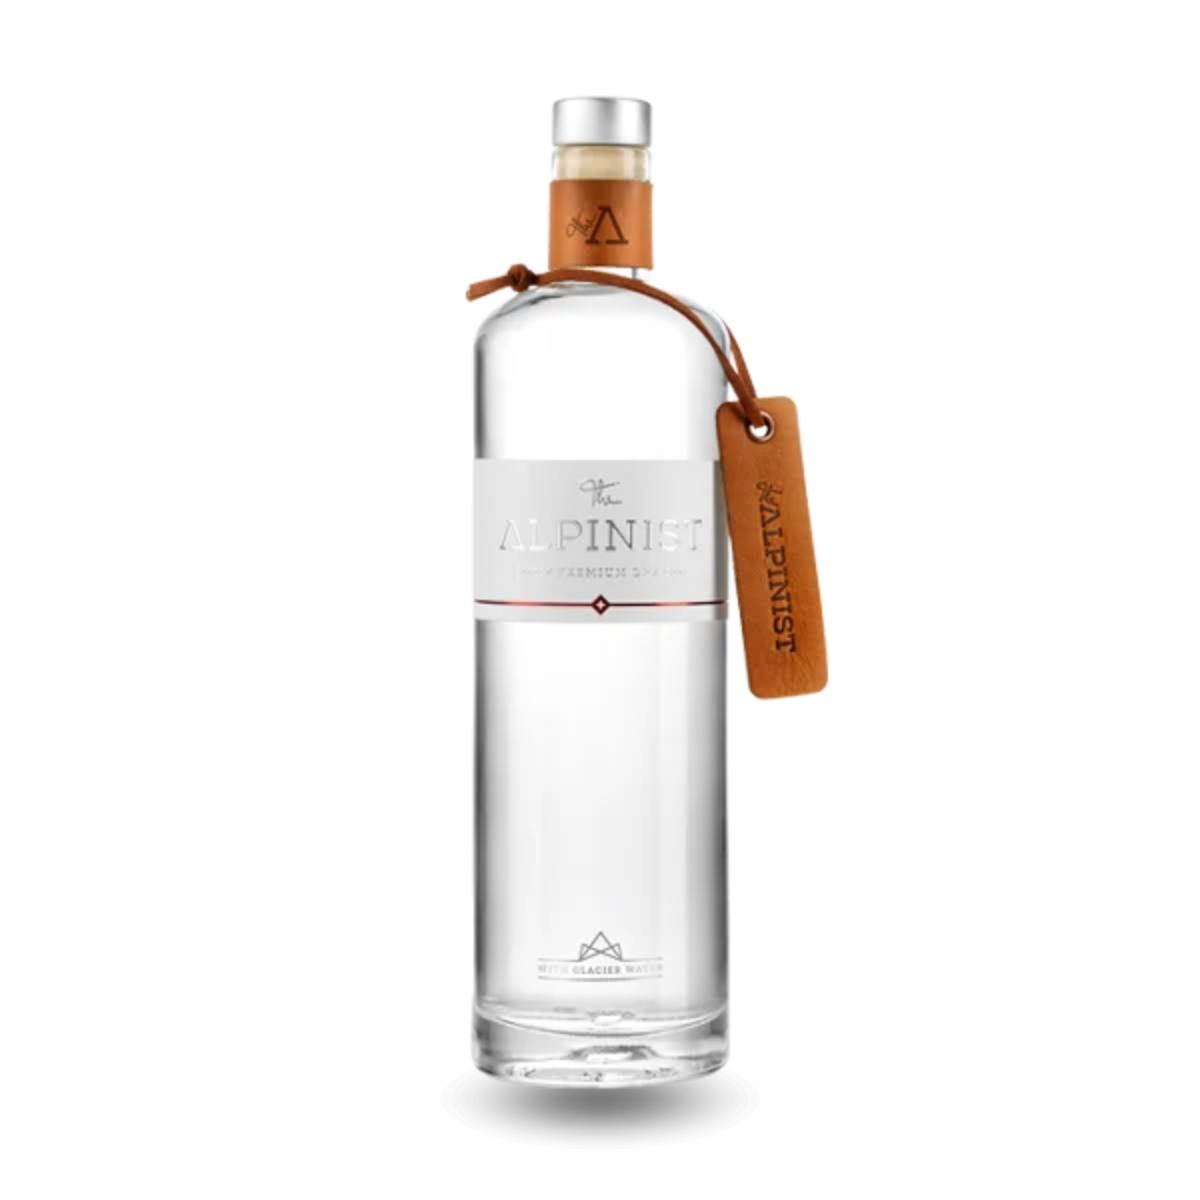 The Alpinist Swiss Premium Dry Gin 0,7l